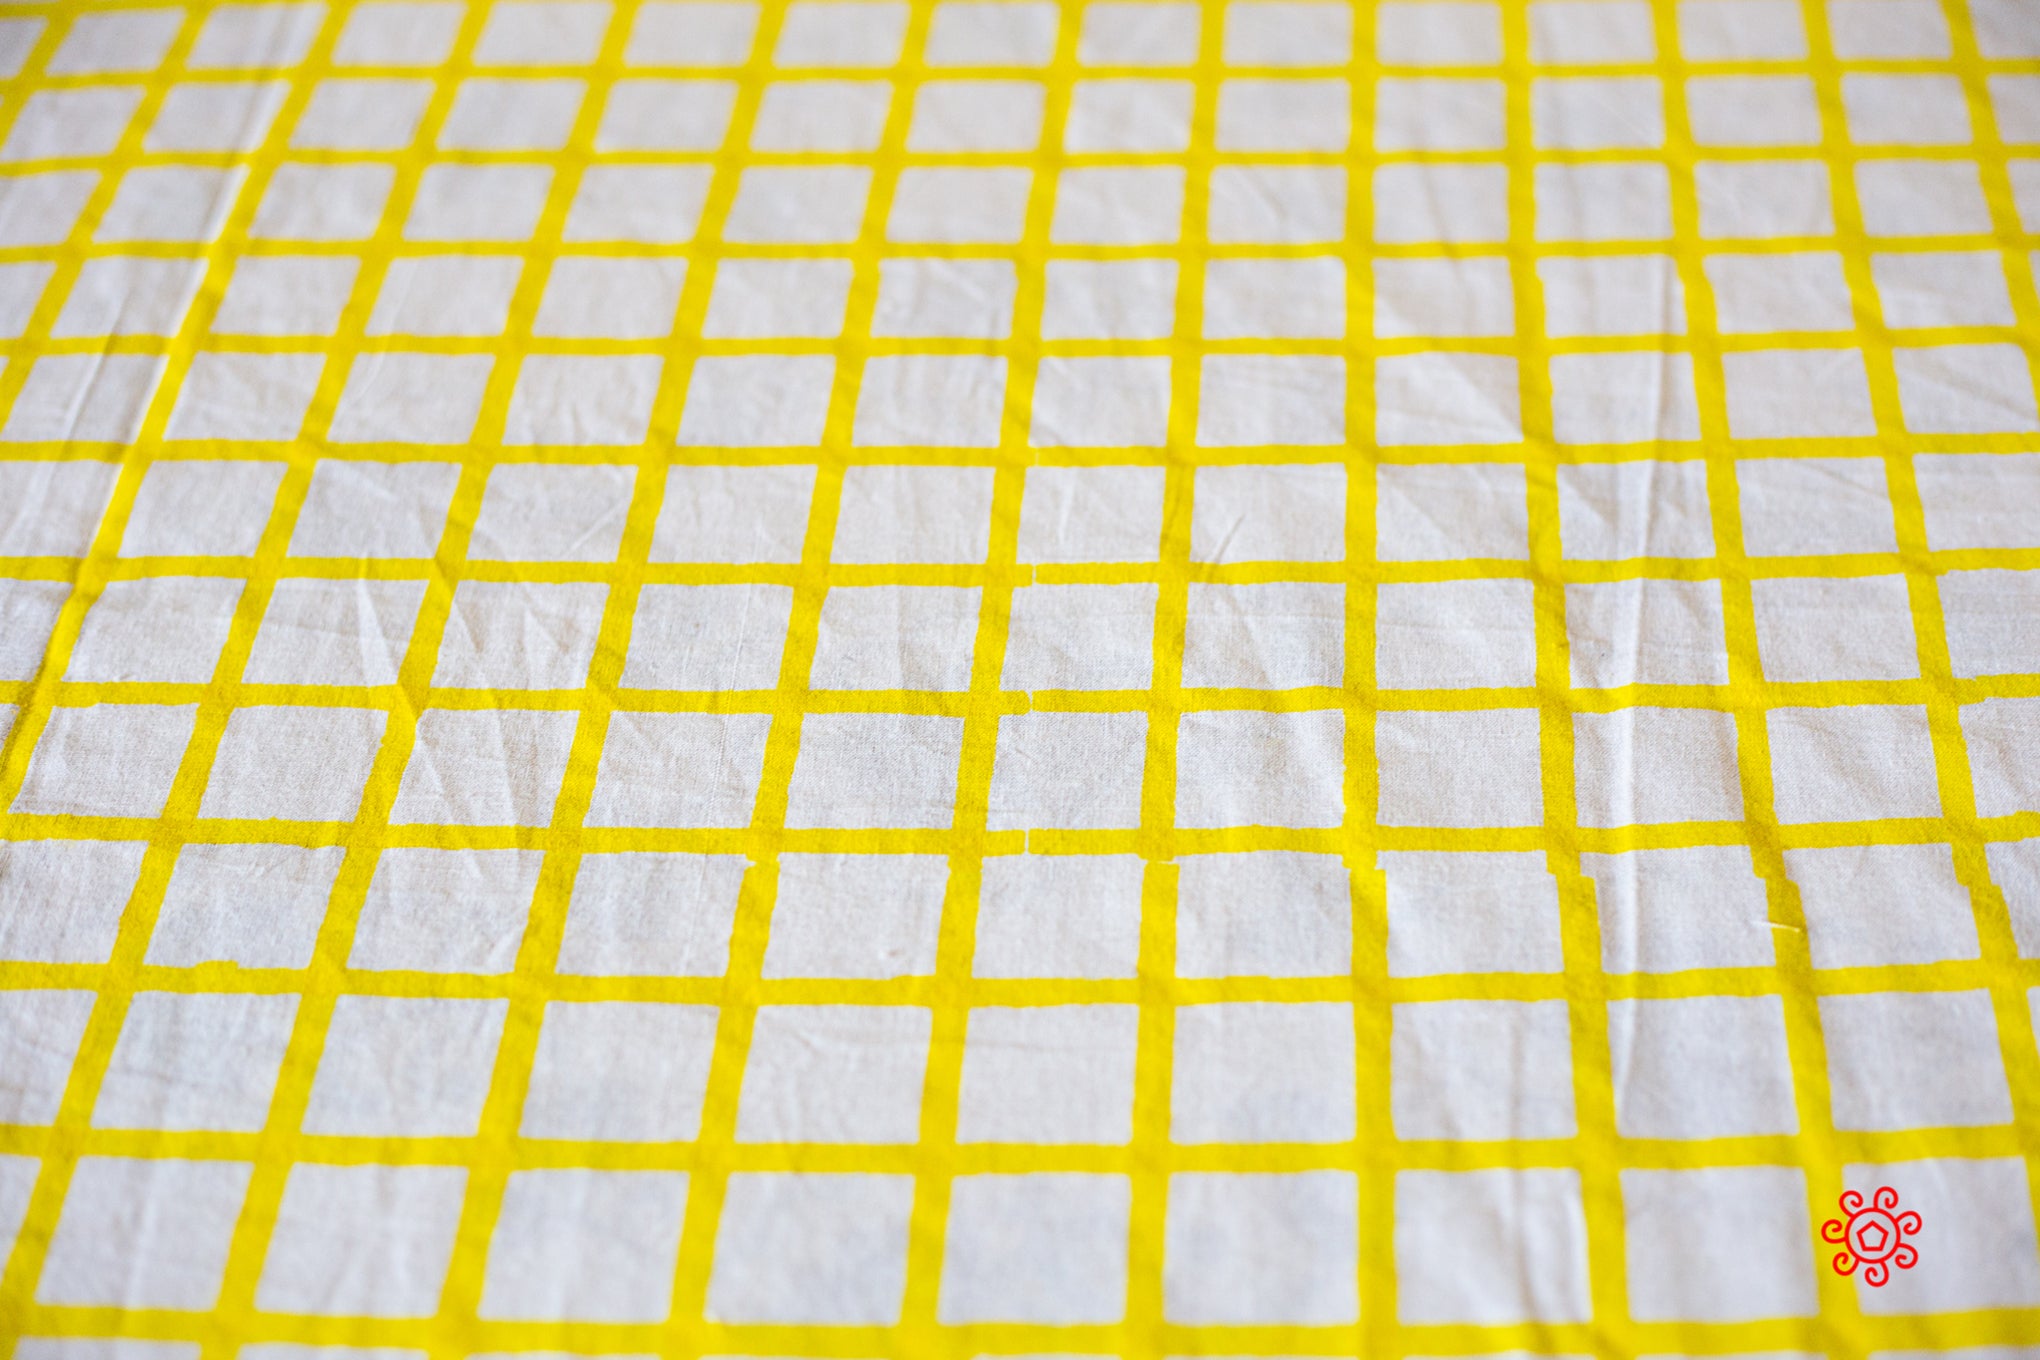 Roysha 2021 Bed Sheet/Flat Sheet/ Bed Linen Queen Size 100% Handmade, Hand Block Printed, Pure Cotton, Check Design, Room Decor Bright Yellow